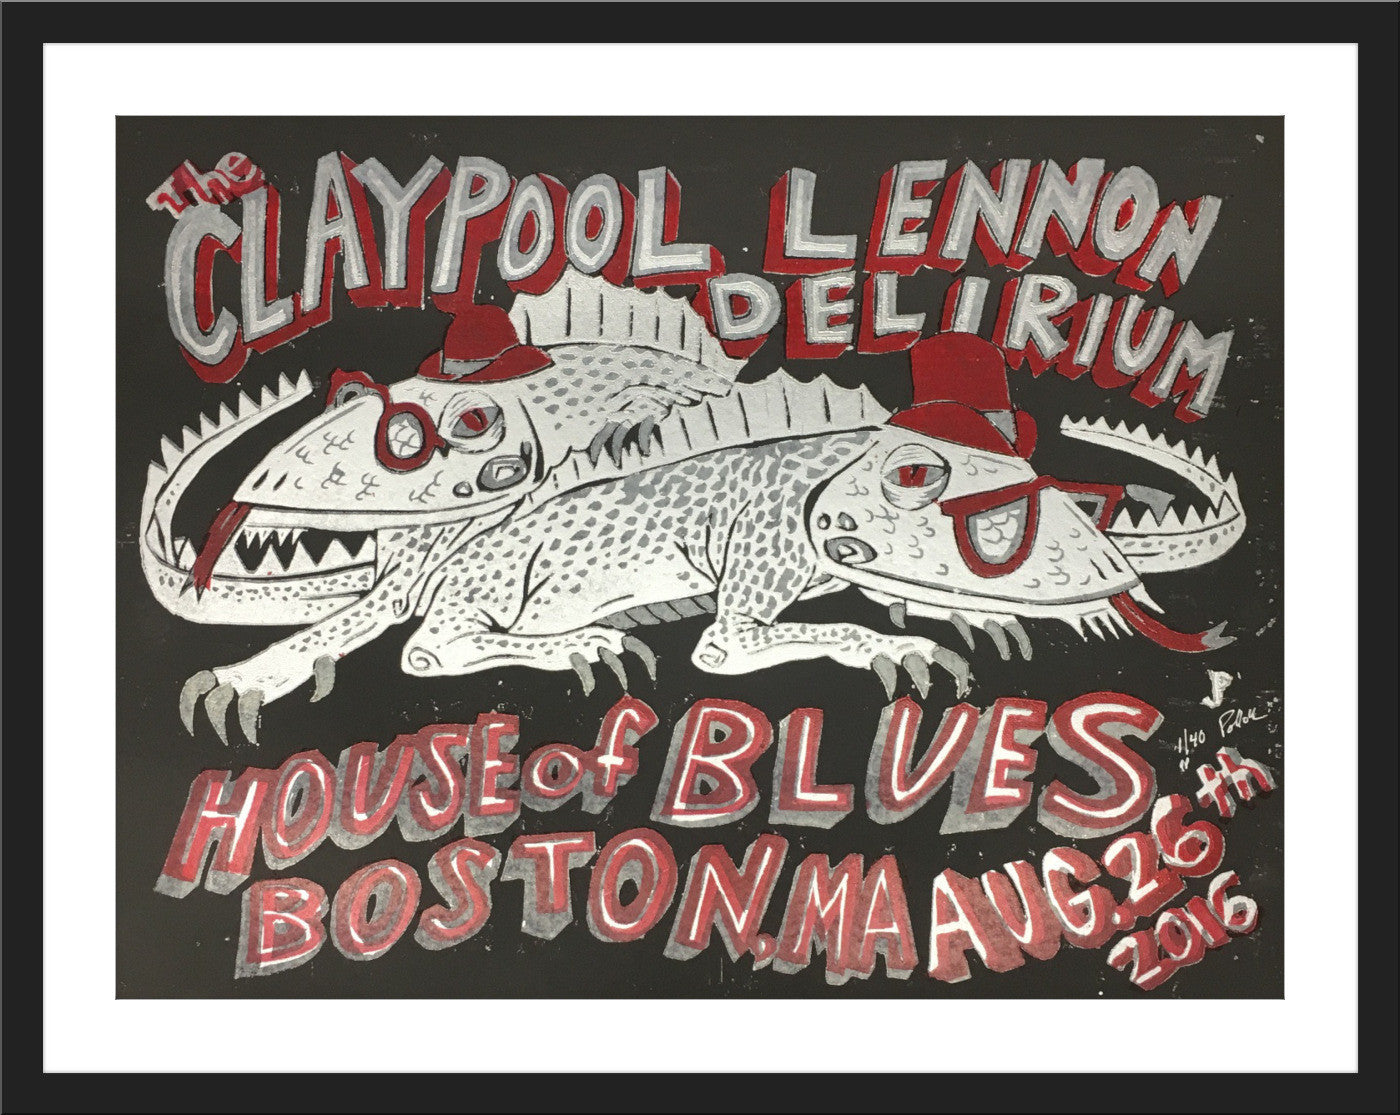 Jim Pollock "Claypool Lennon Delirium - House of Blues"